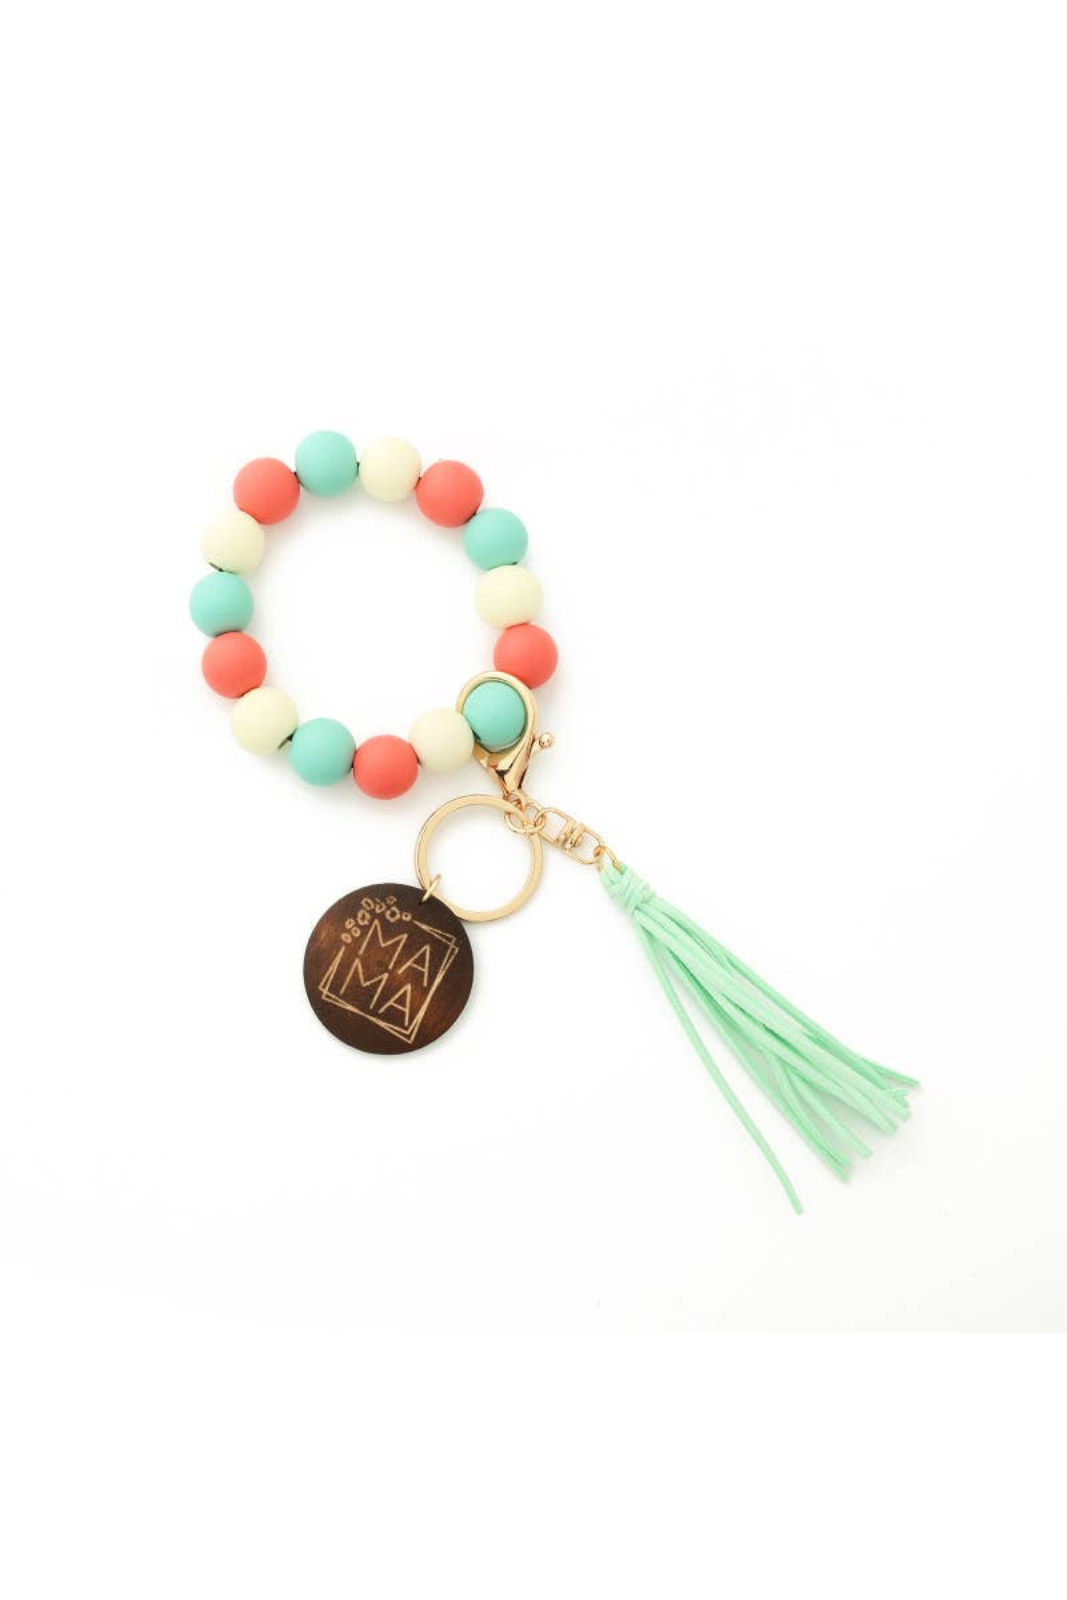 Coral and Mint Mama Wood Bead Tassel Bracelet Keychain